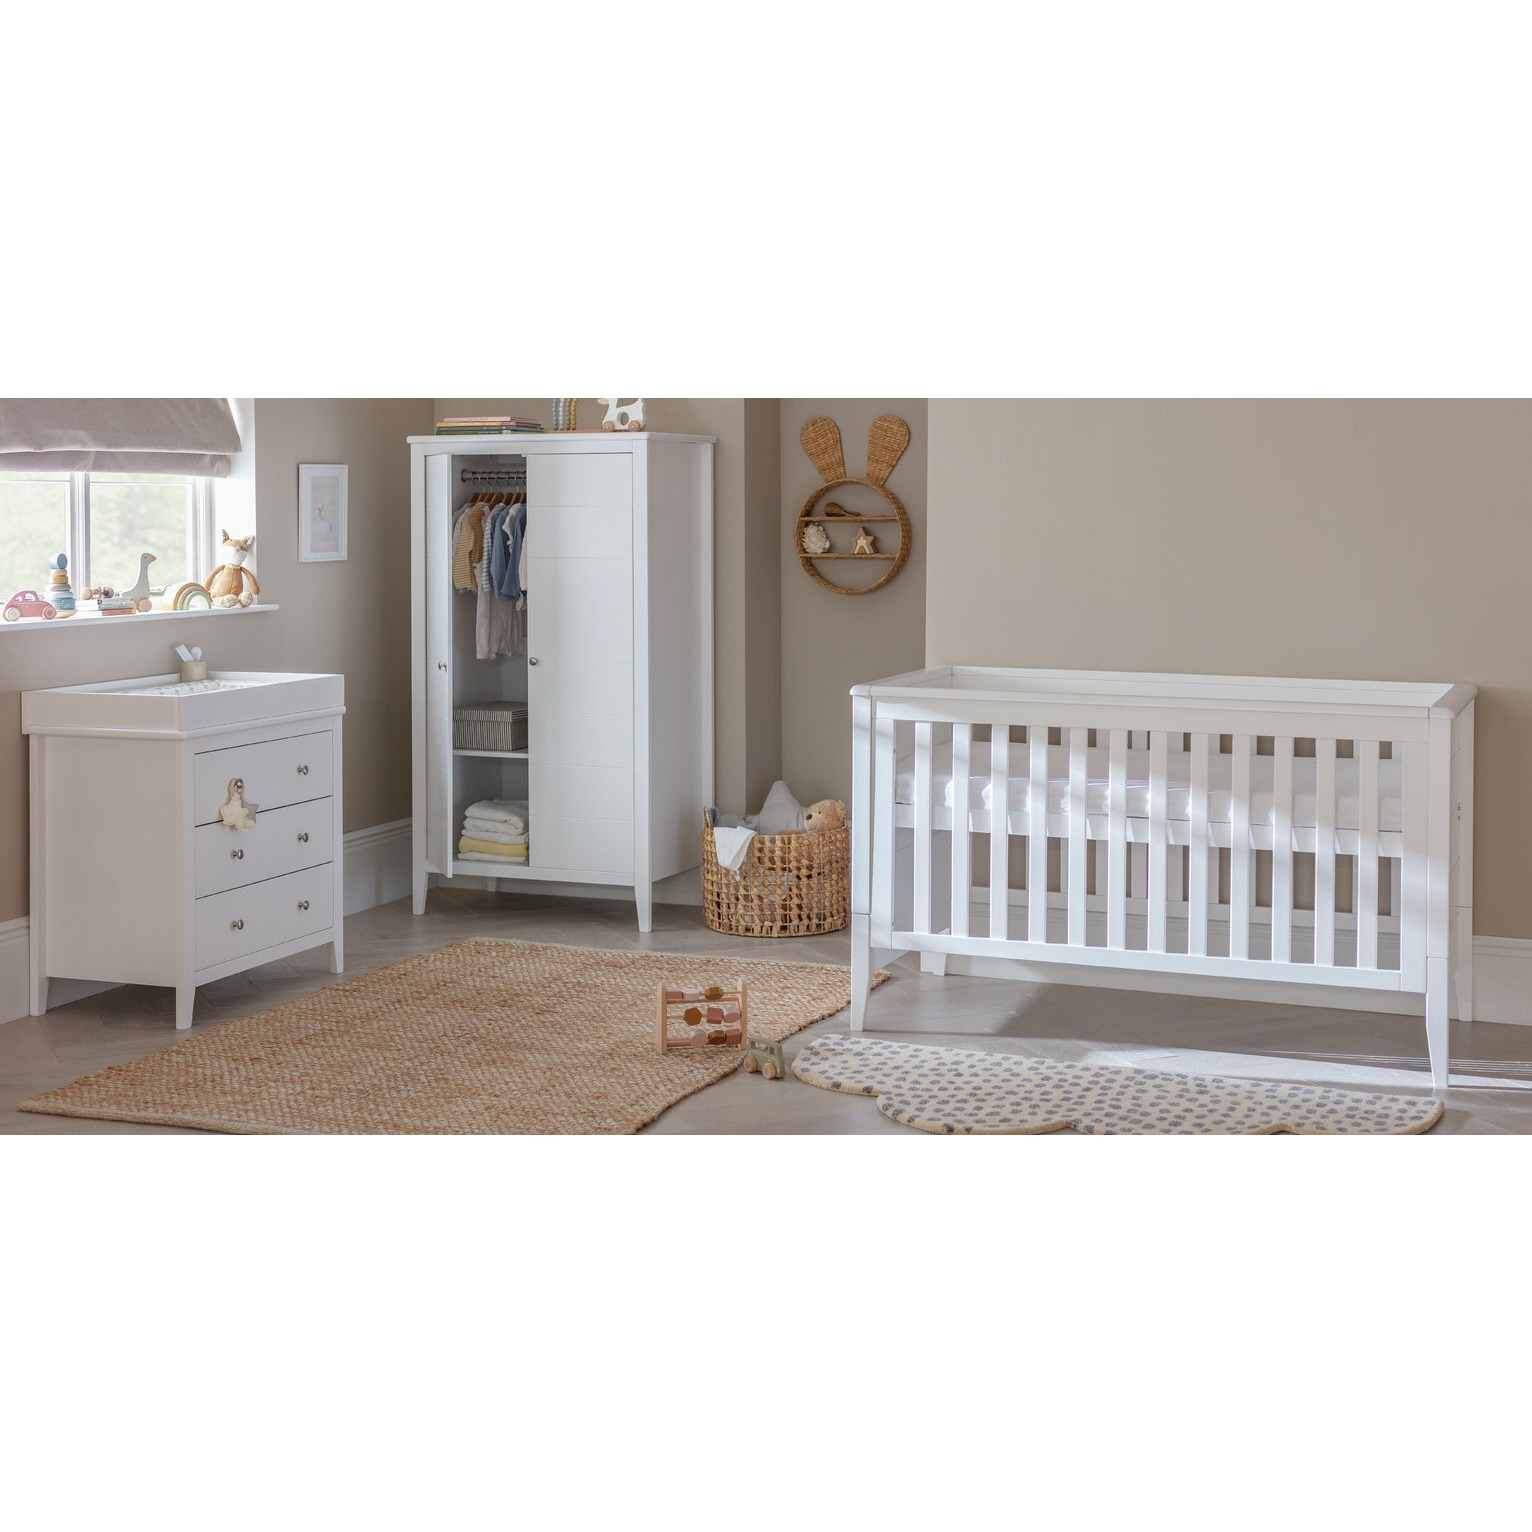 Cuggl Canterbury 3 Piece Nursery Furniture Set - White - image 1